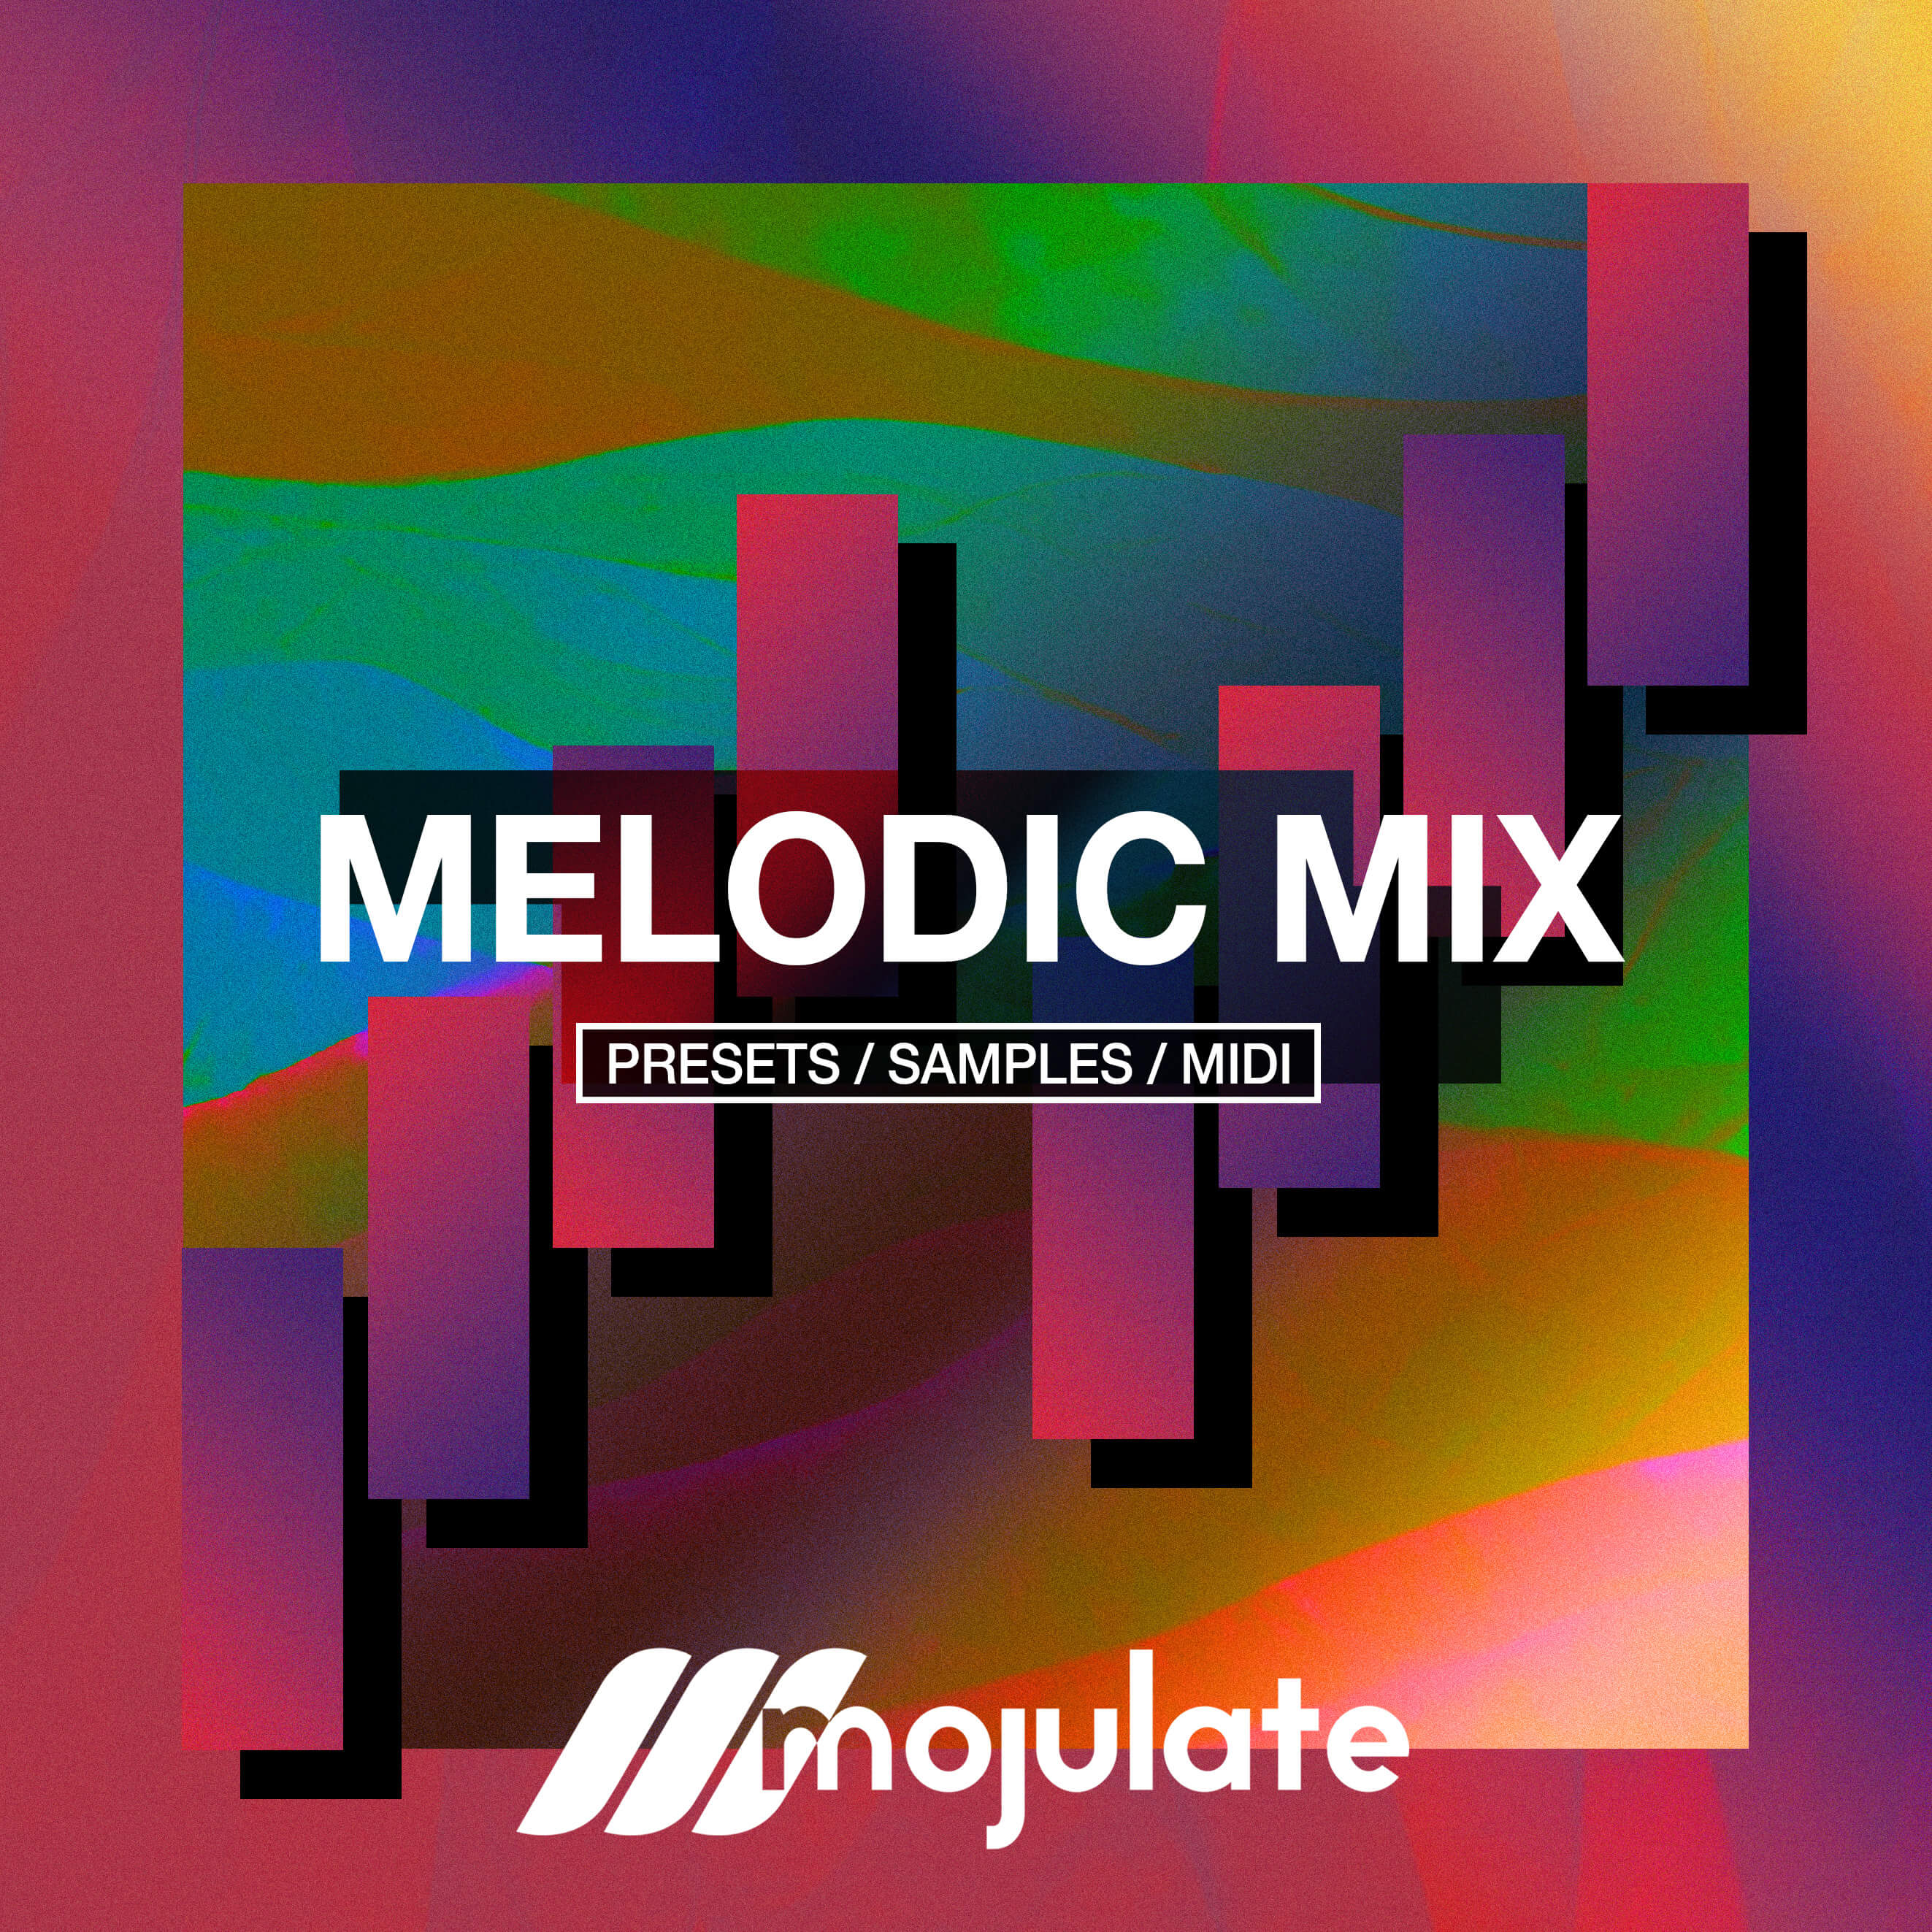 Melodic Mix | Presets, Samples, MIDI